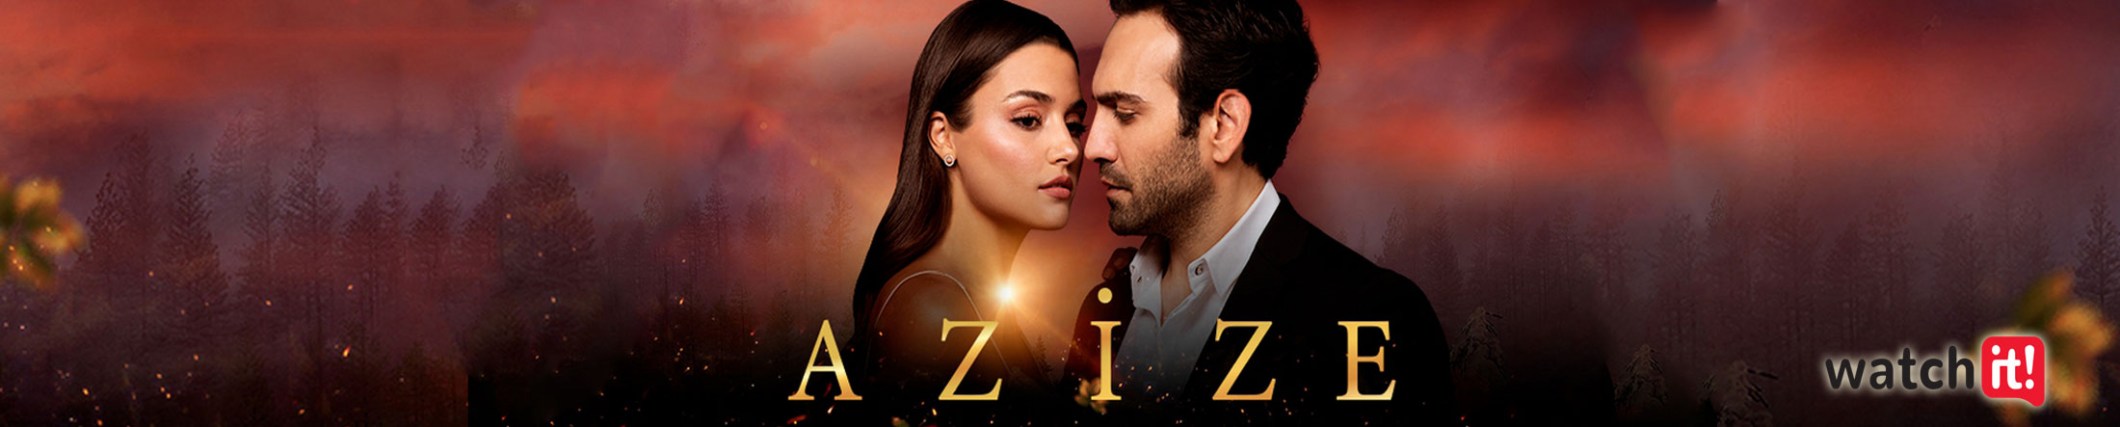 Azize season 1 English subtitles